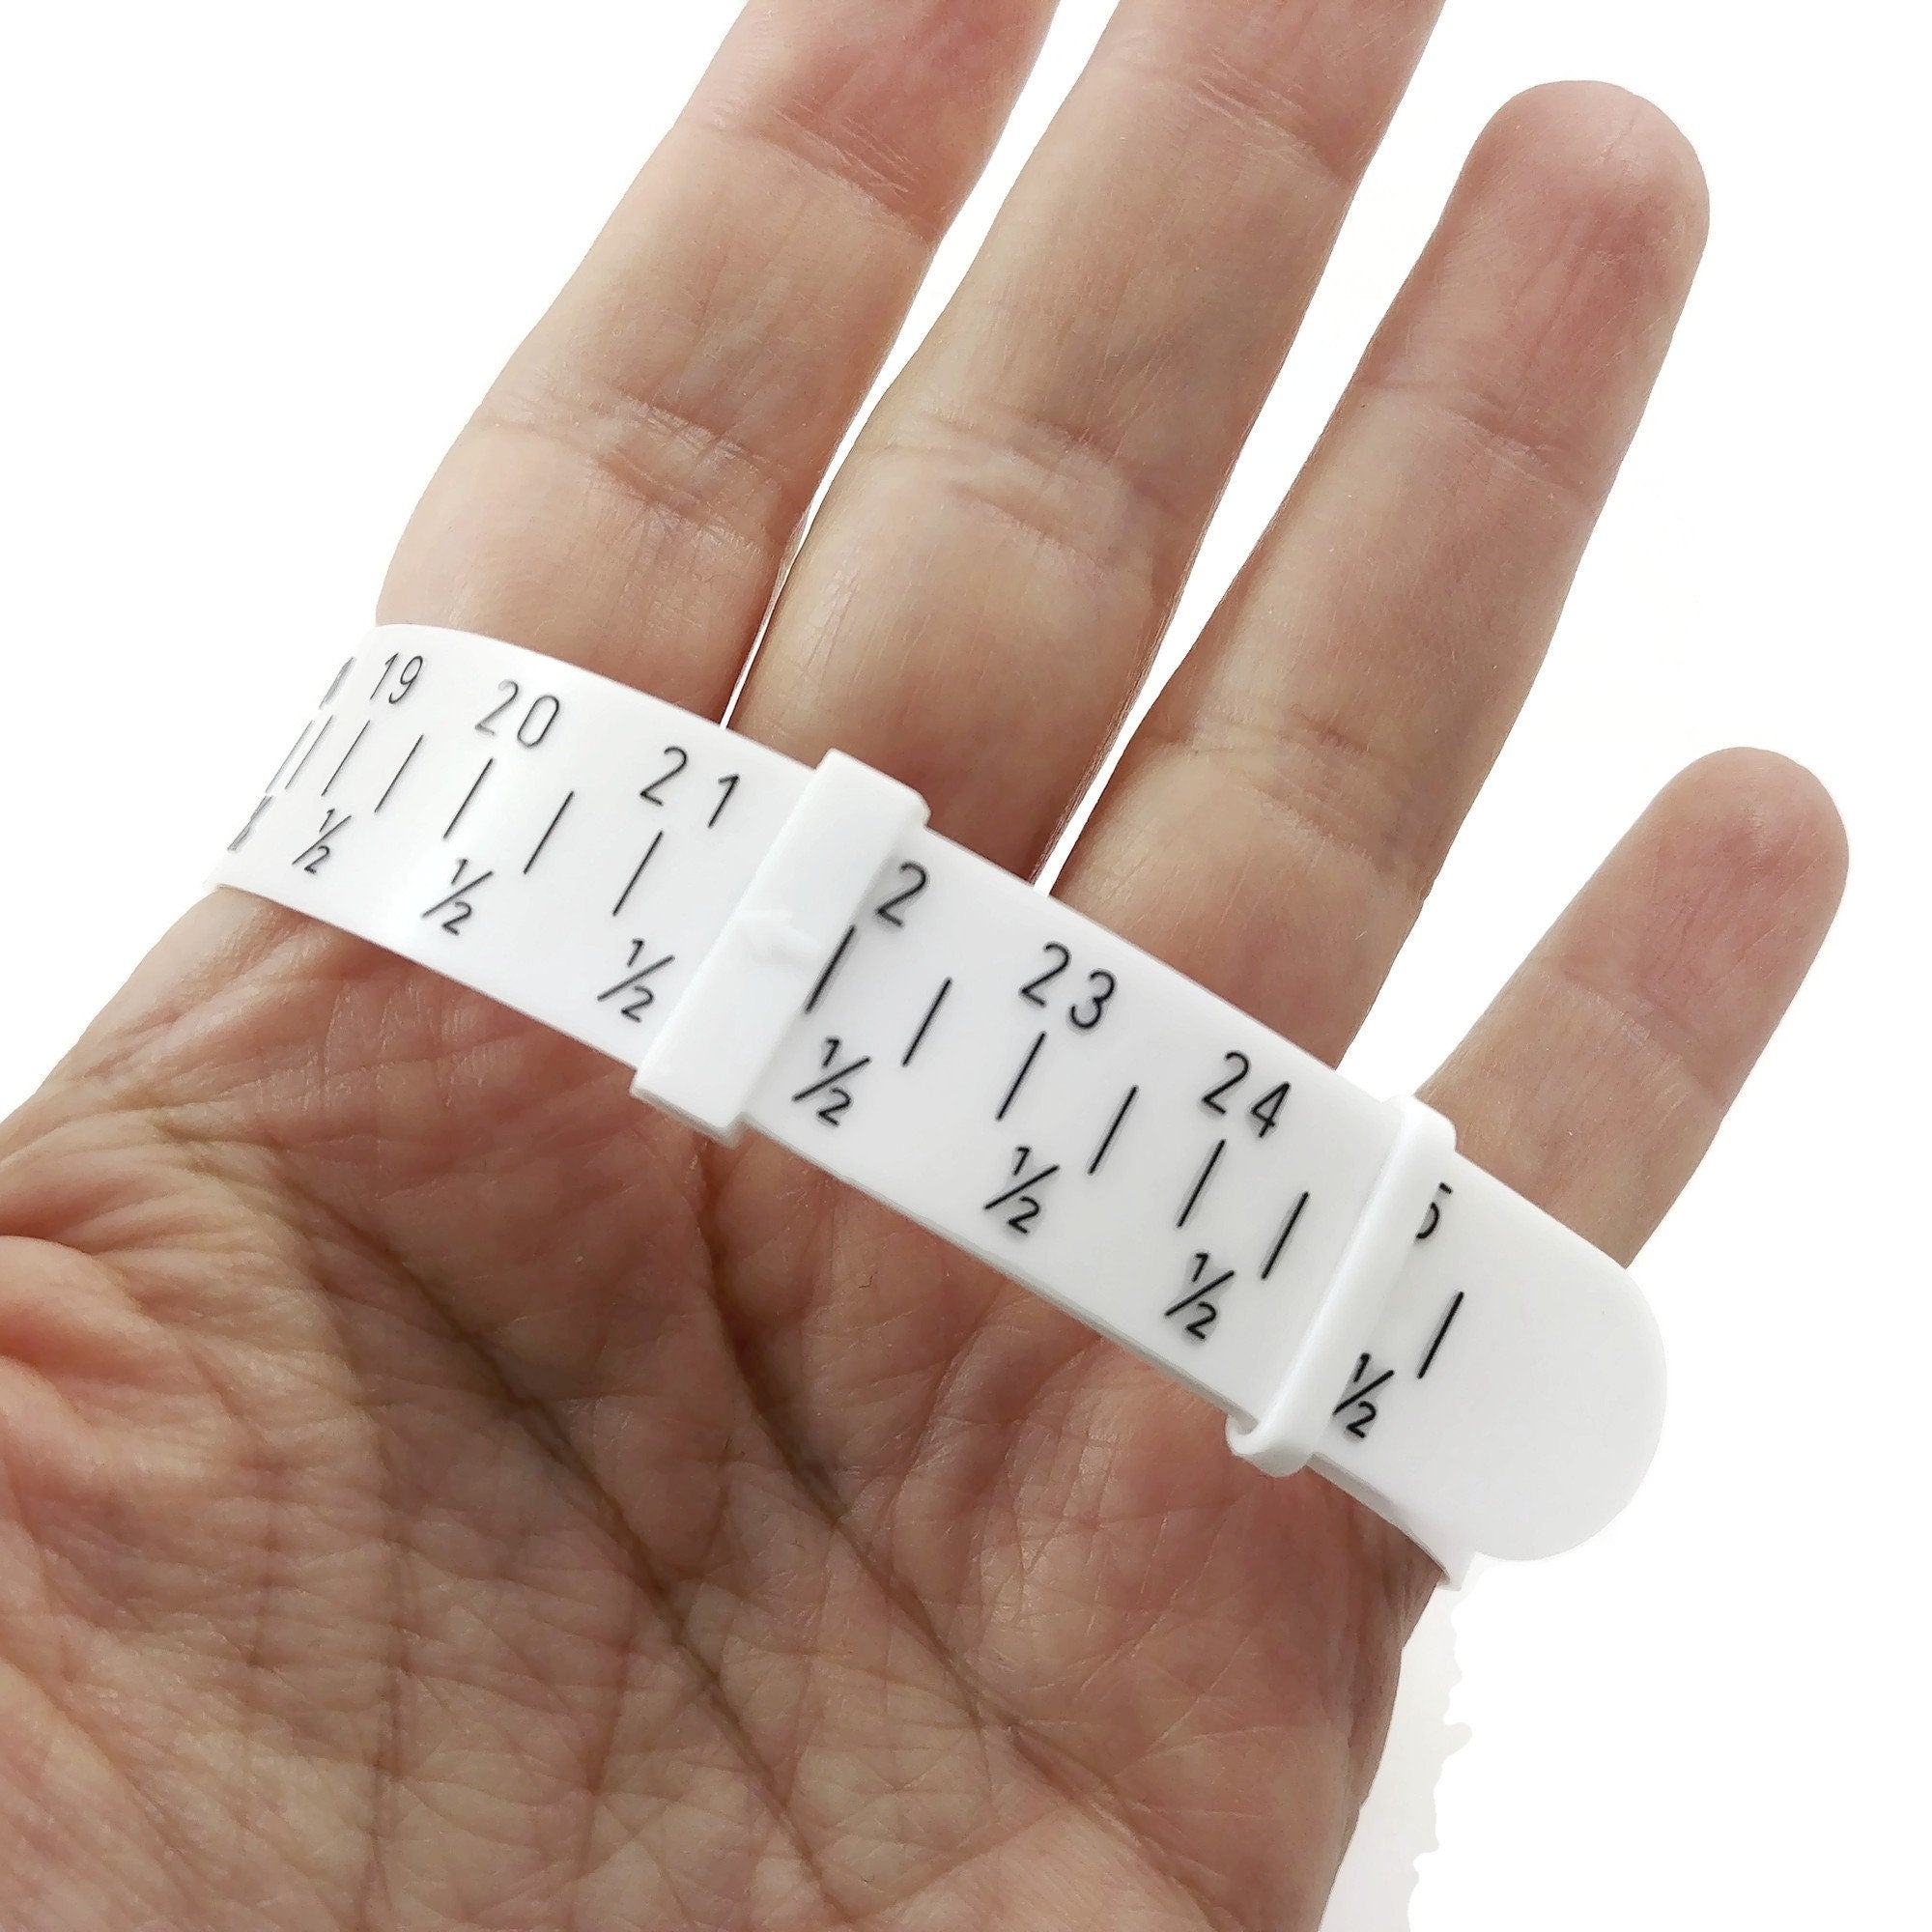 Reusable bracelet sizer, Adjustable multisizer tool, Flexible plastic wrist ruler